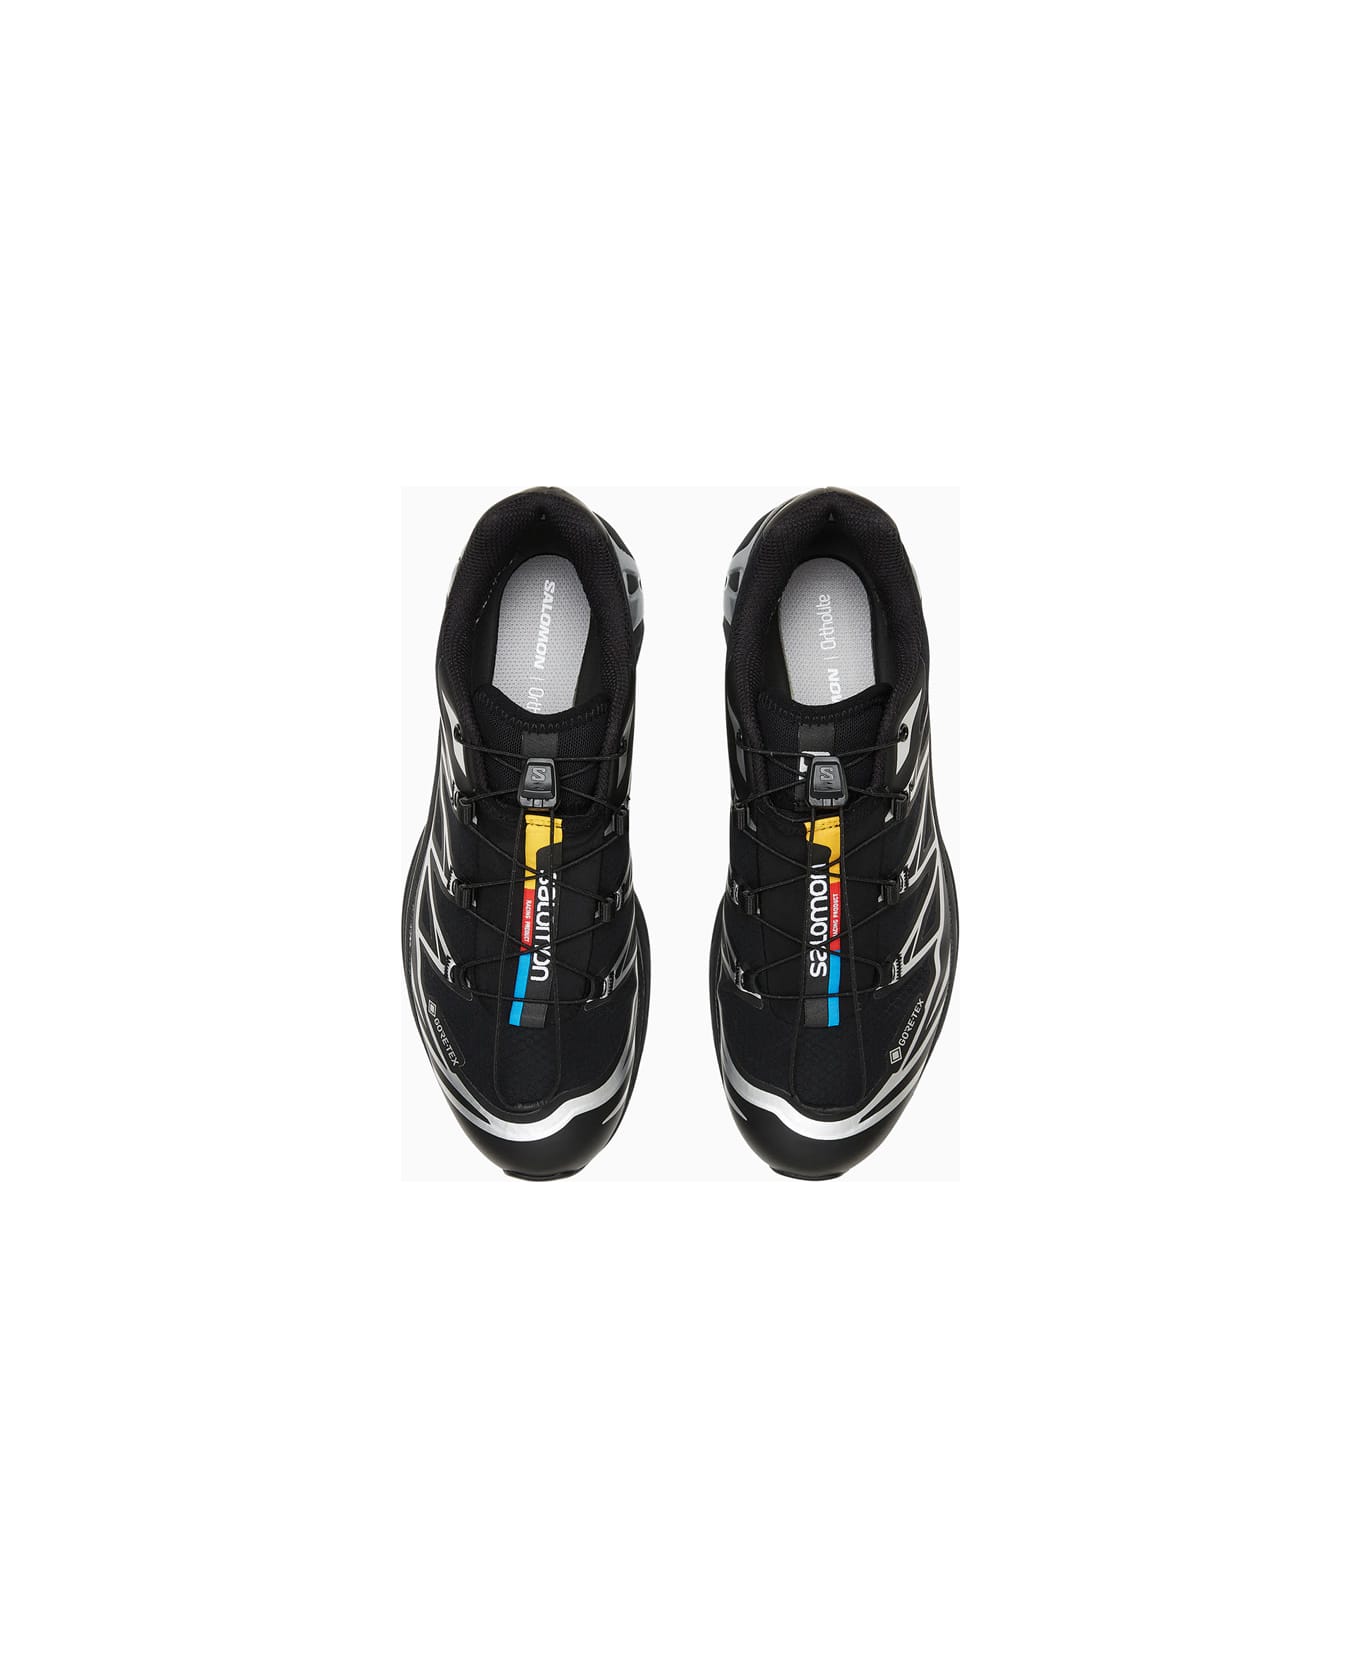 Salomon S-lab Xt-6 Gore-tex Sneakers L47450600 - BLACK/SILVER